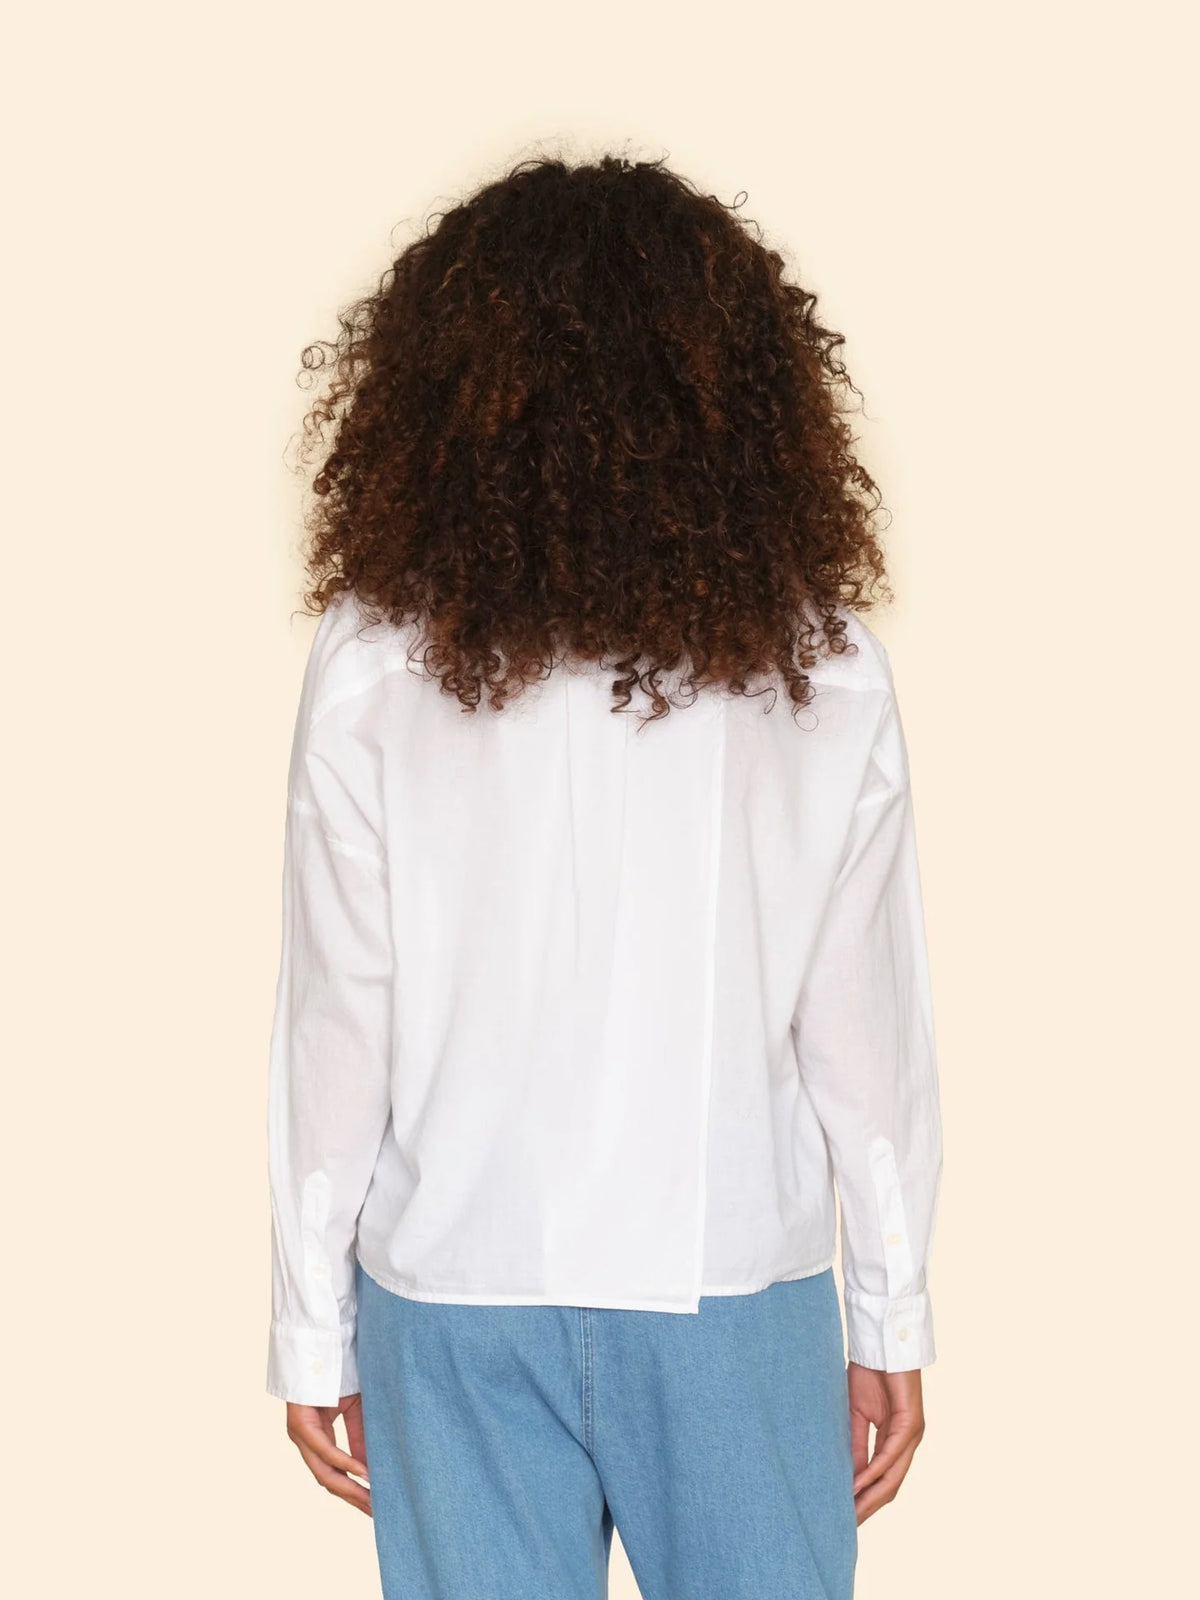 Xirena White Riley Shirt